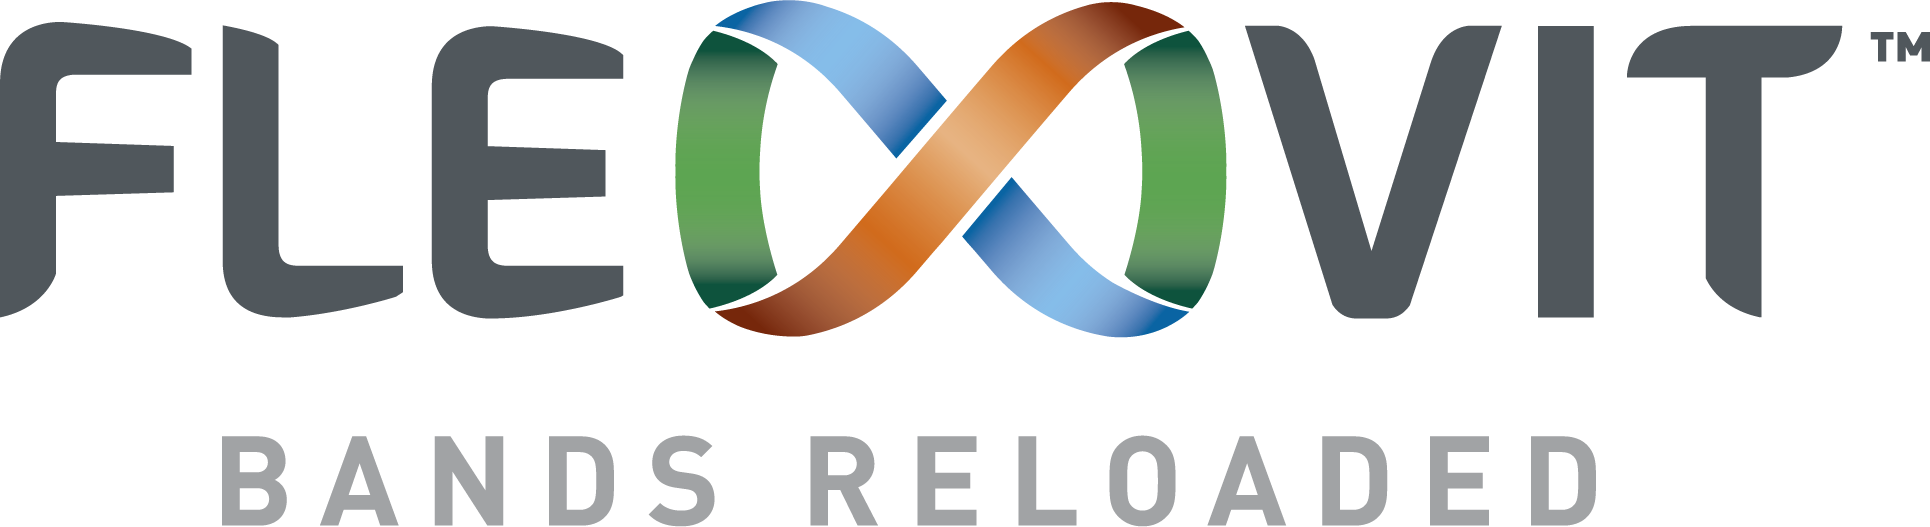 Flexvit BandsReloaded FullColour Logo 2018 | Nuestras marcas